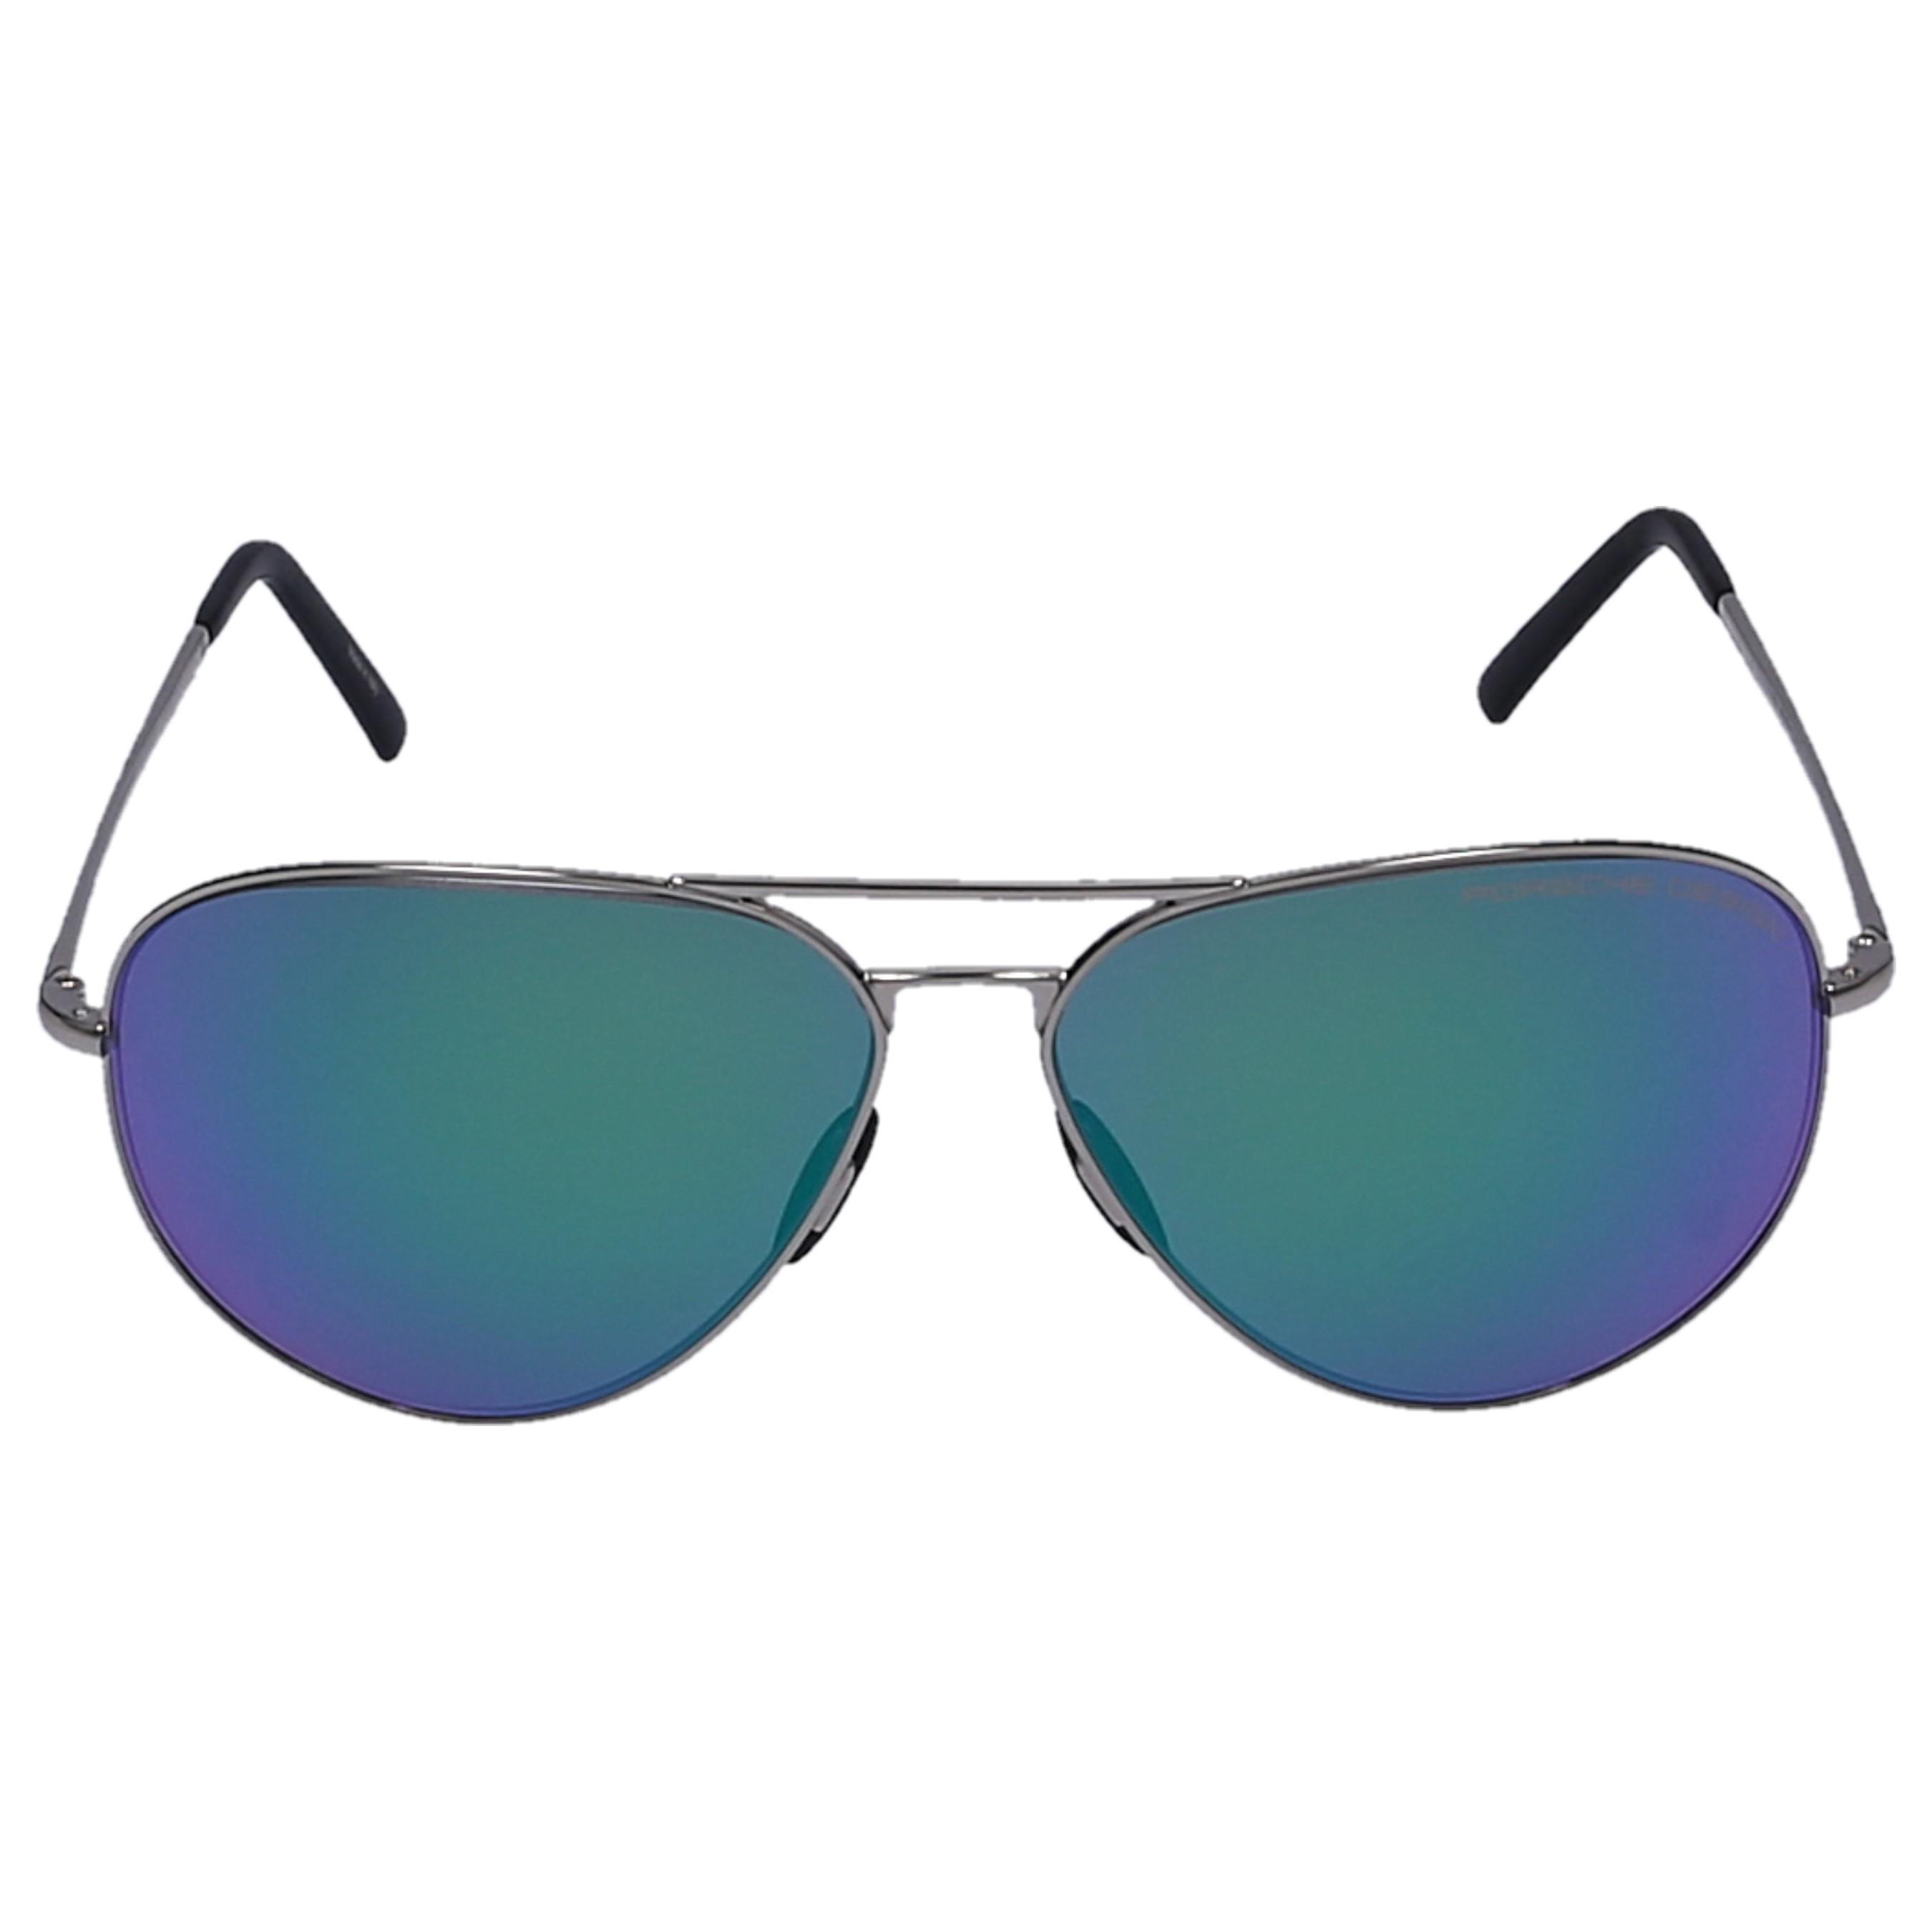 Porsche Design Men Sunglasses Aviator 8505 K Metal Acetate Mirrored ...